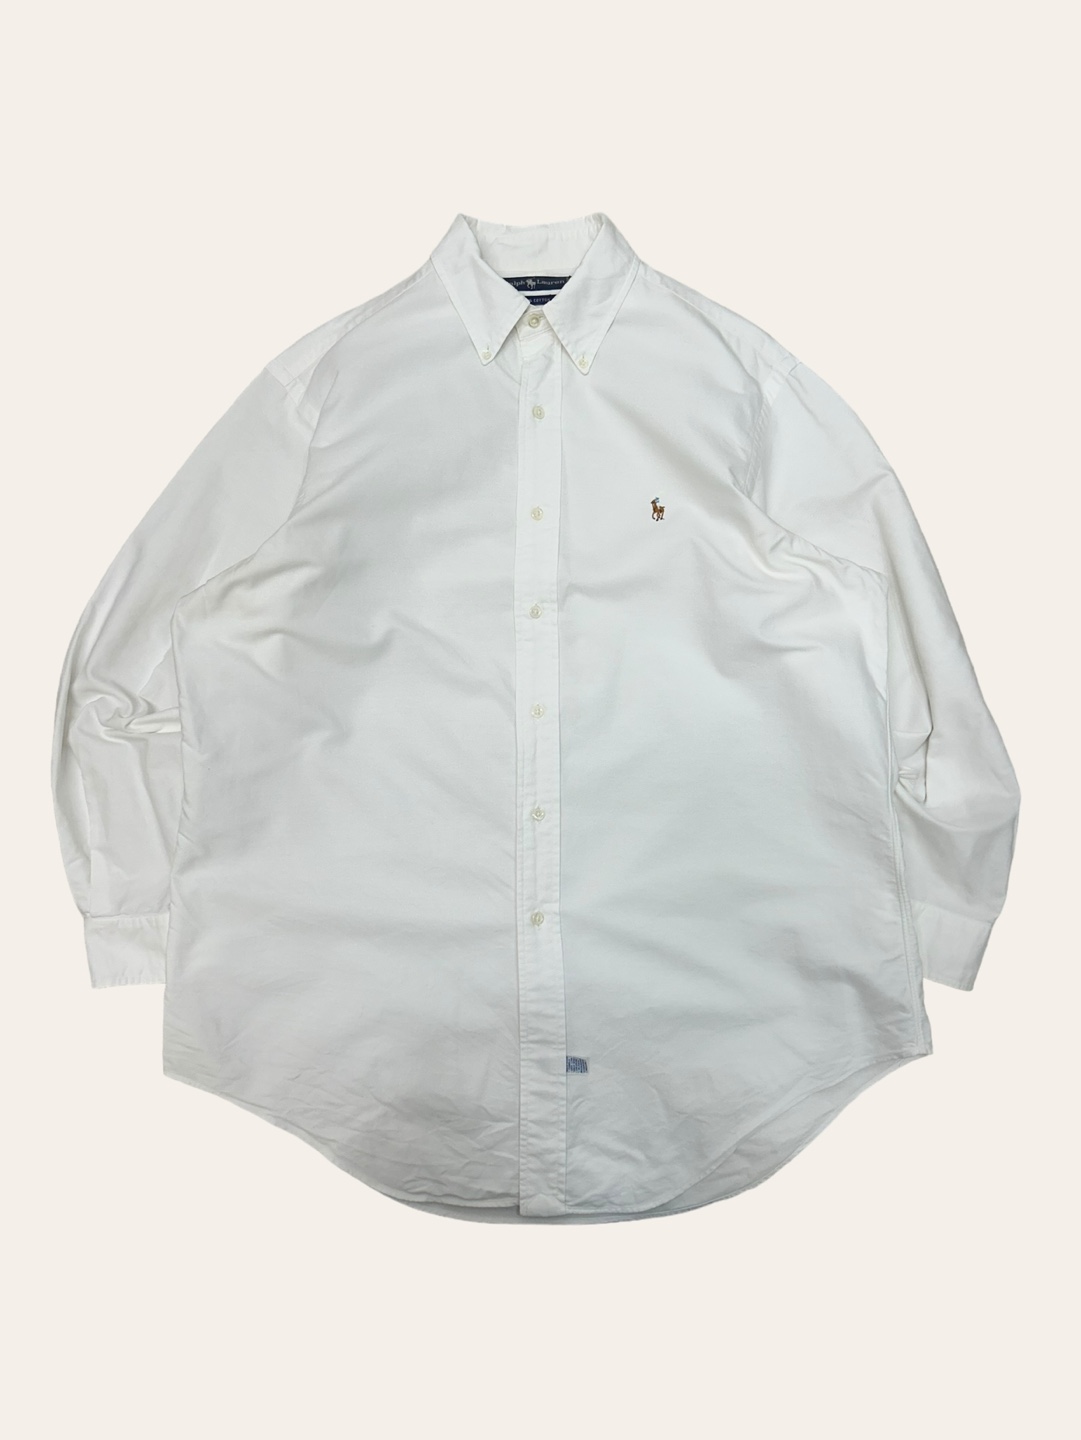 (From USA)Polo ralph lauren white oxford shirt 16